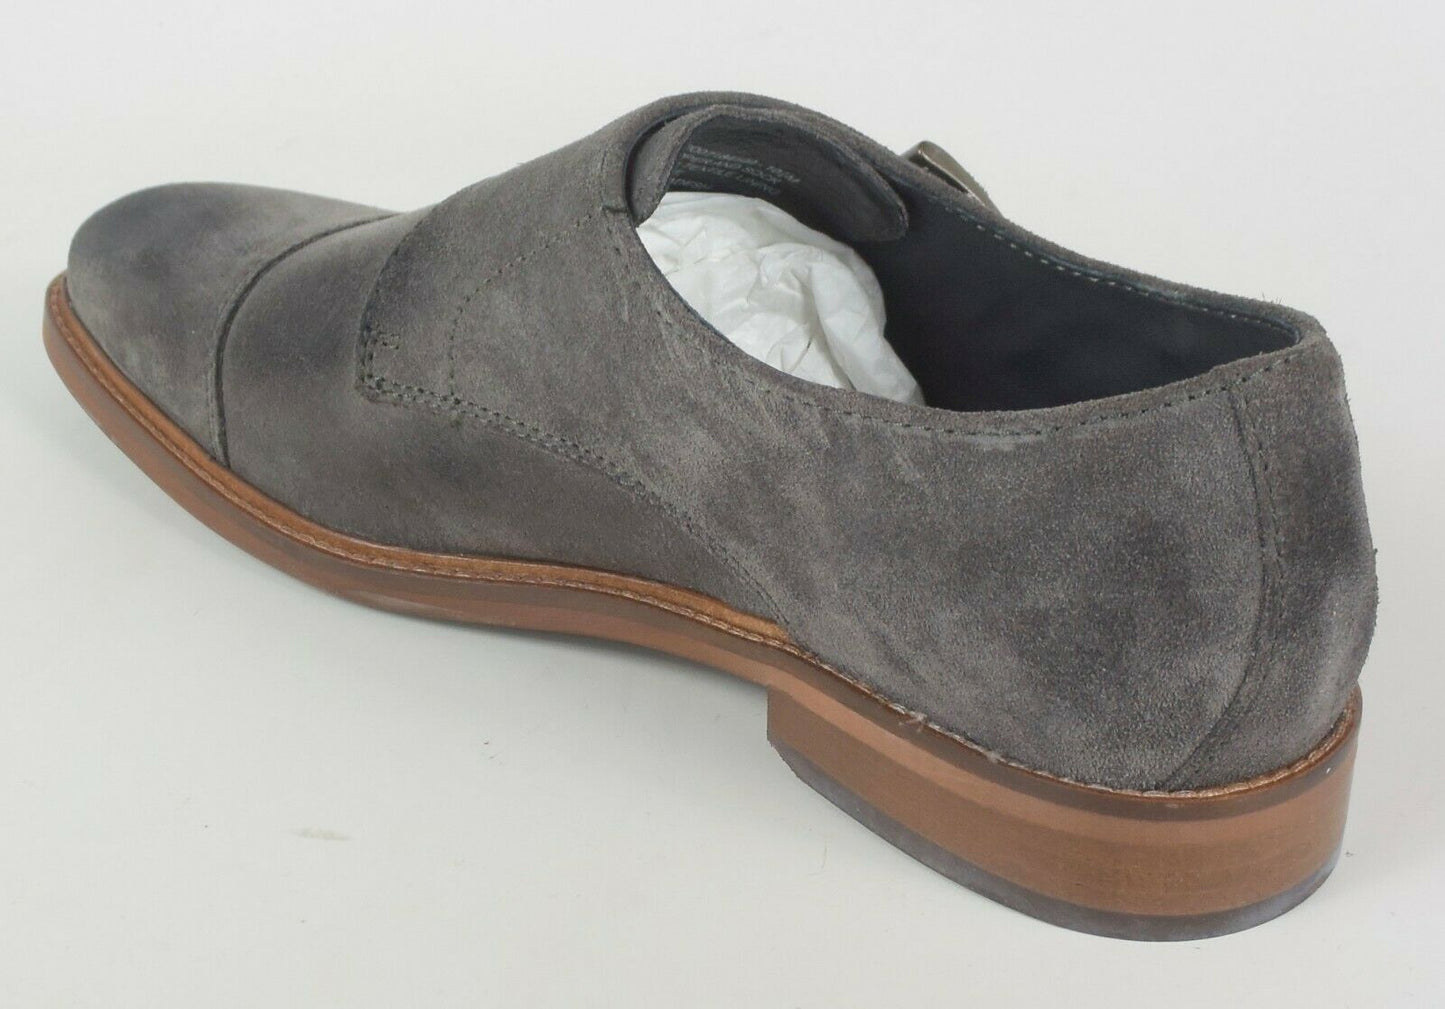 Alfani Men's Darius Monk-Strap Oxfords Shoes